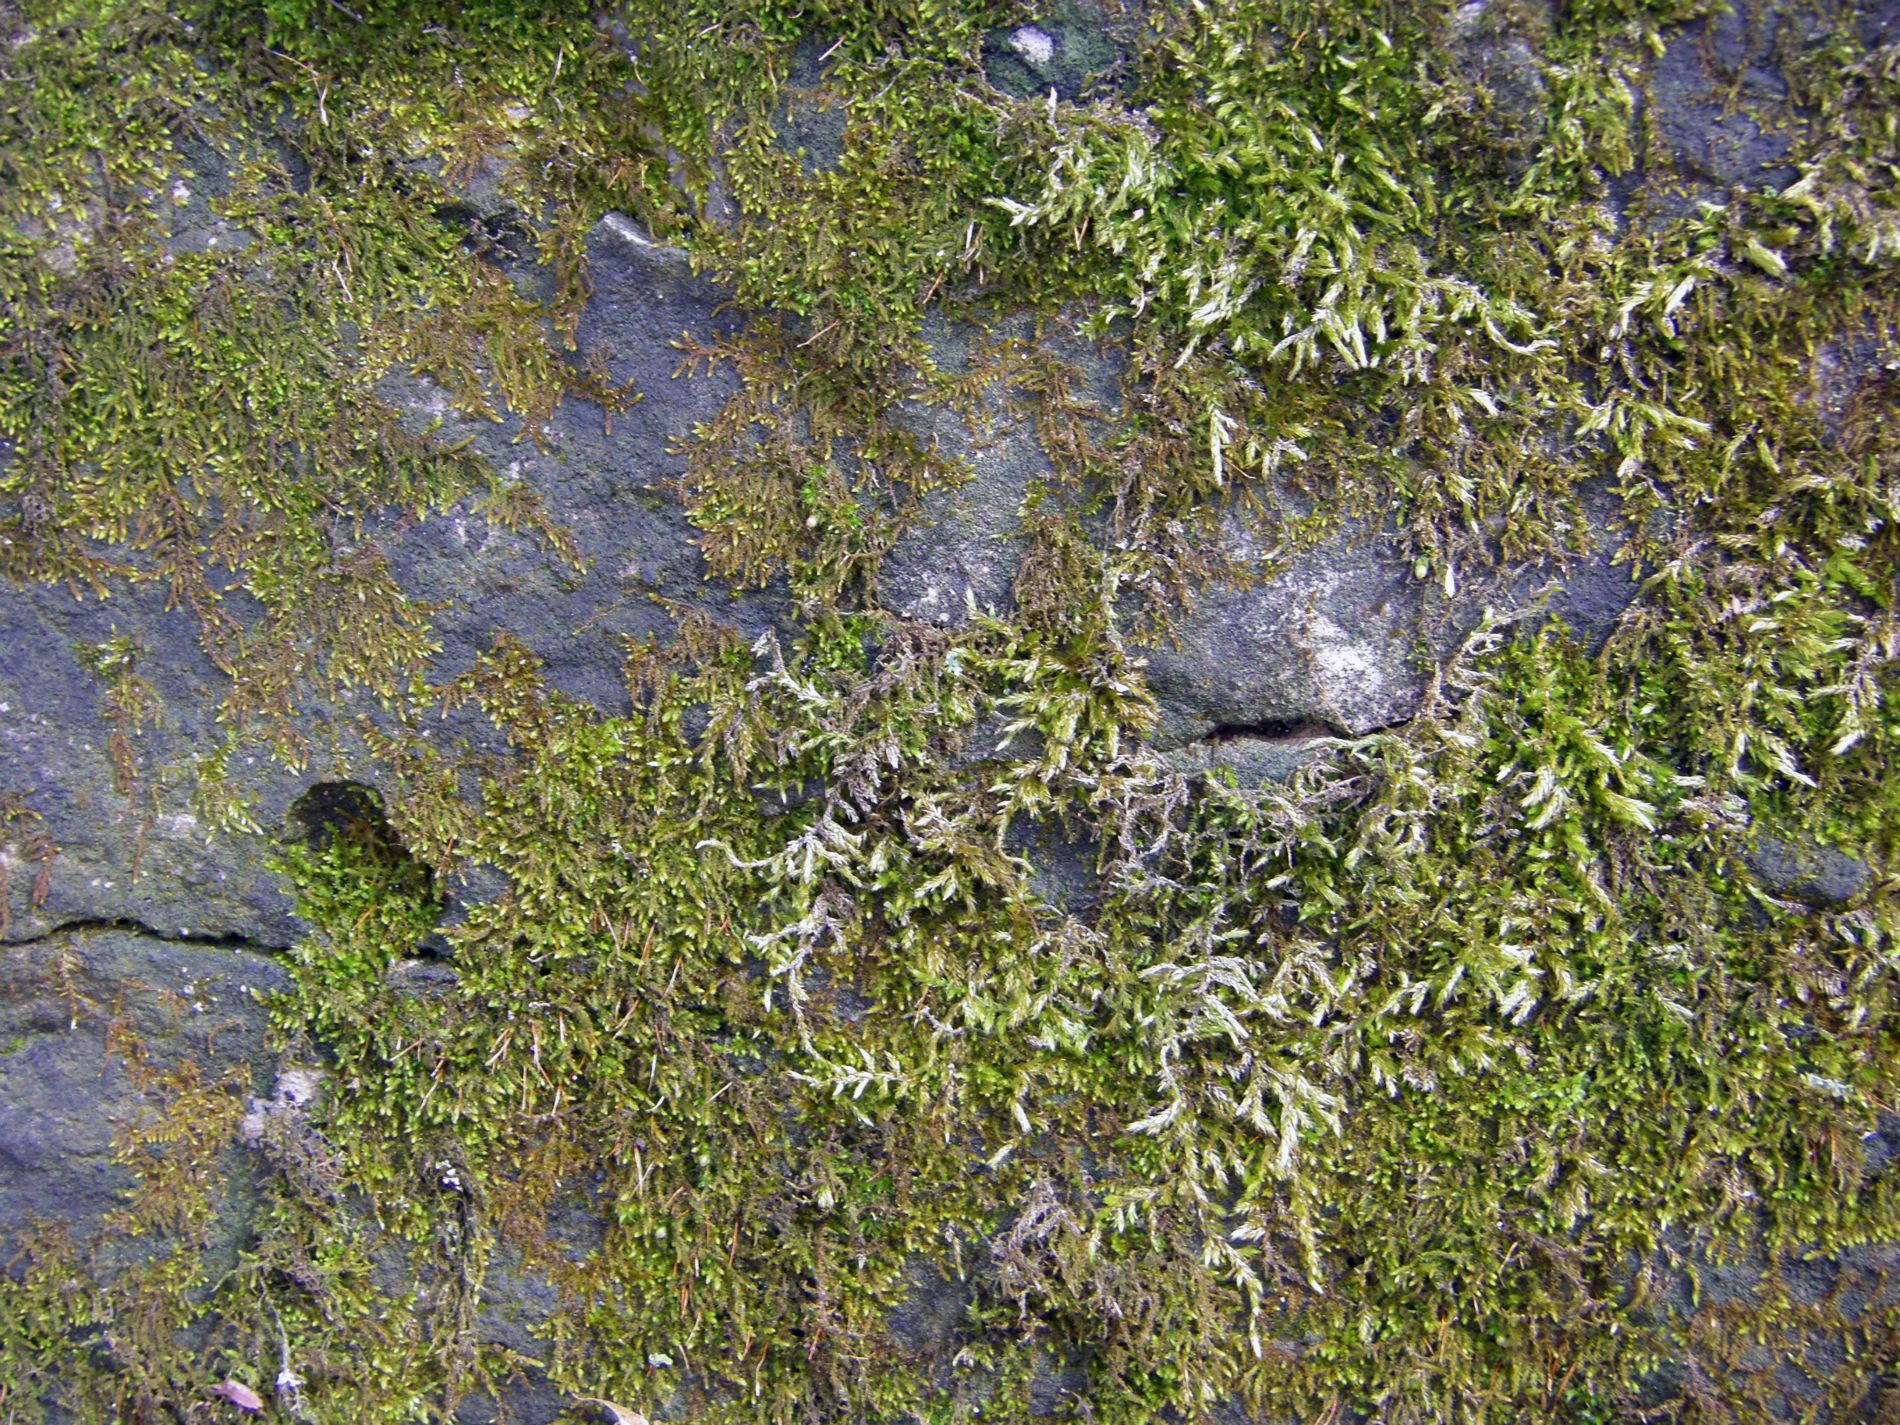 Moss on fieldstone. Tileable texture here.